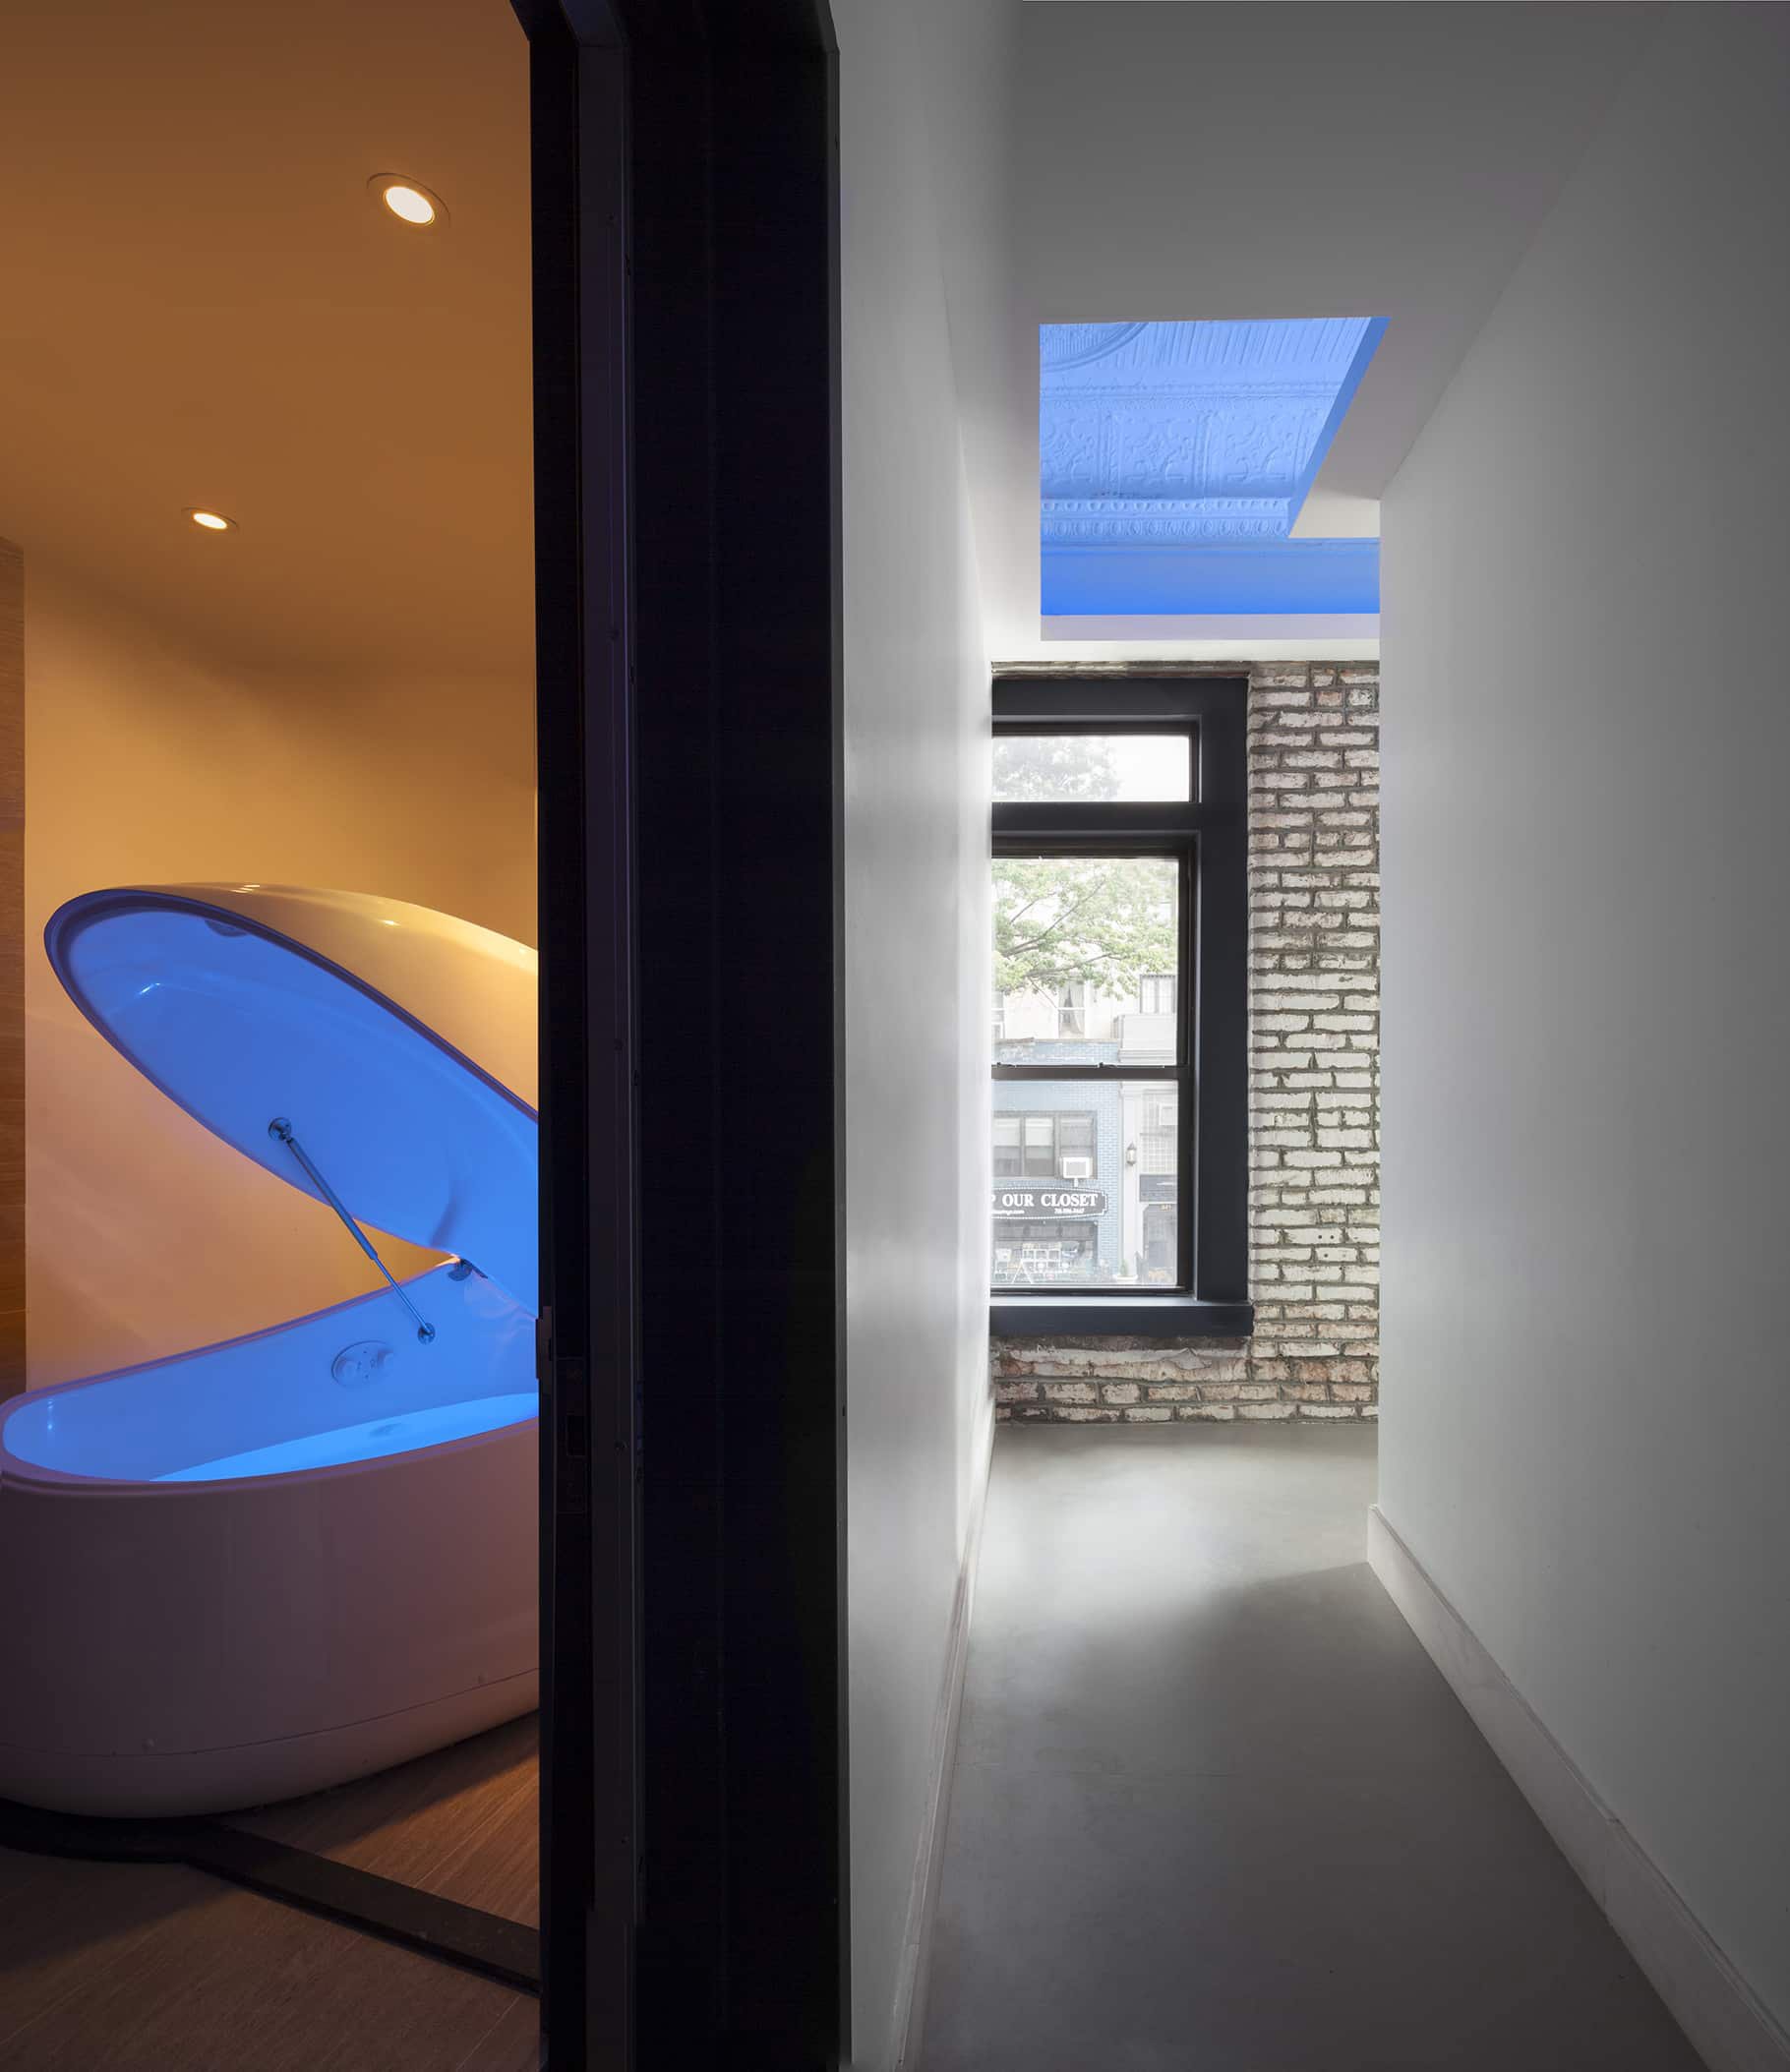 NYC Architect Architecture Modern Wellness Design Float Spa Commercial Renovate Renovation Flotation Therapy Exposed Brick Blue Light Flotation Pod